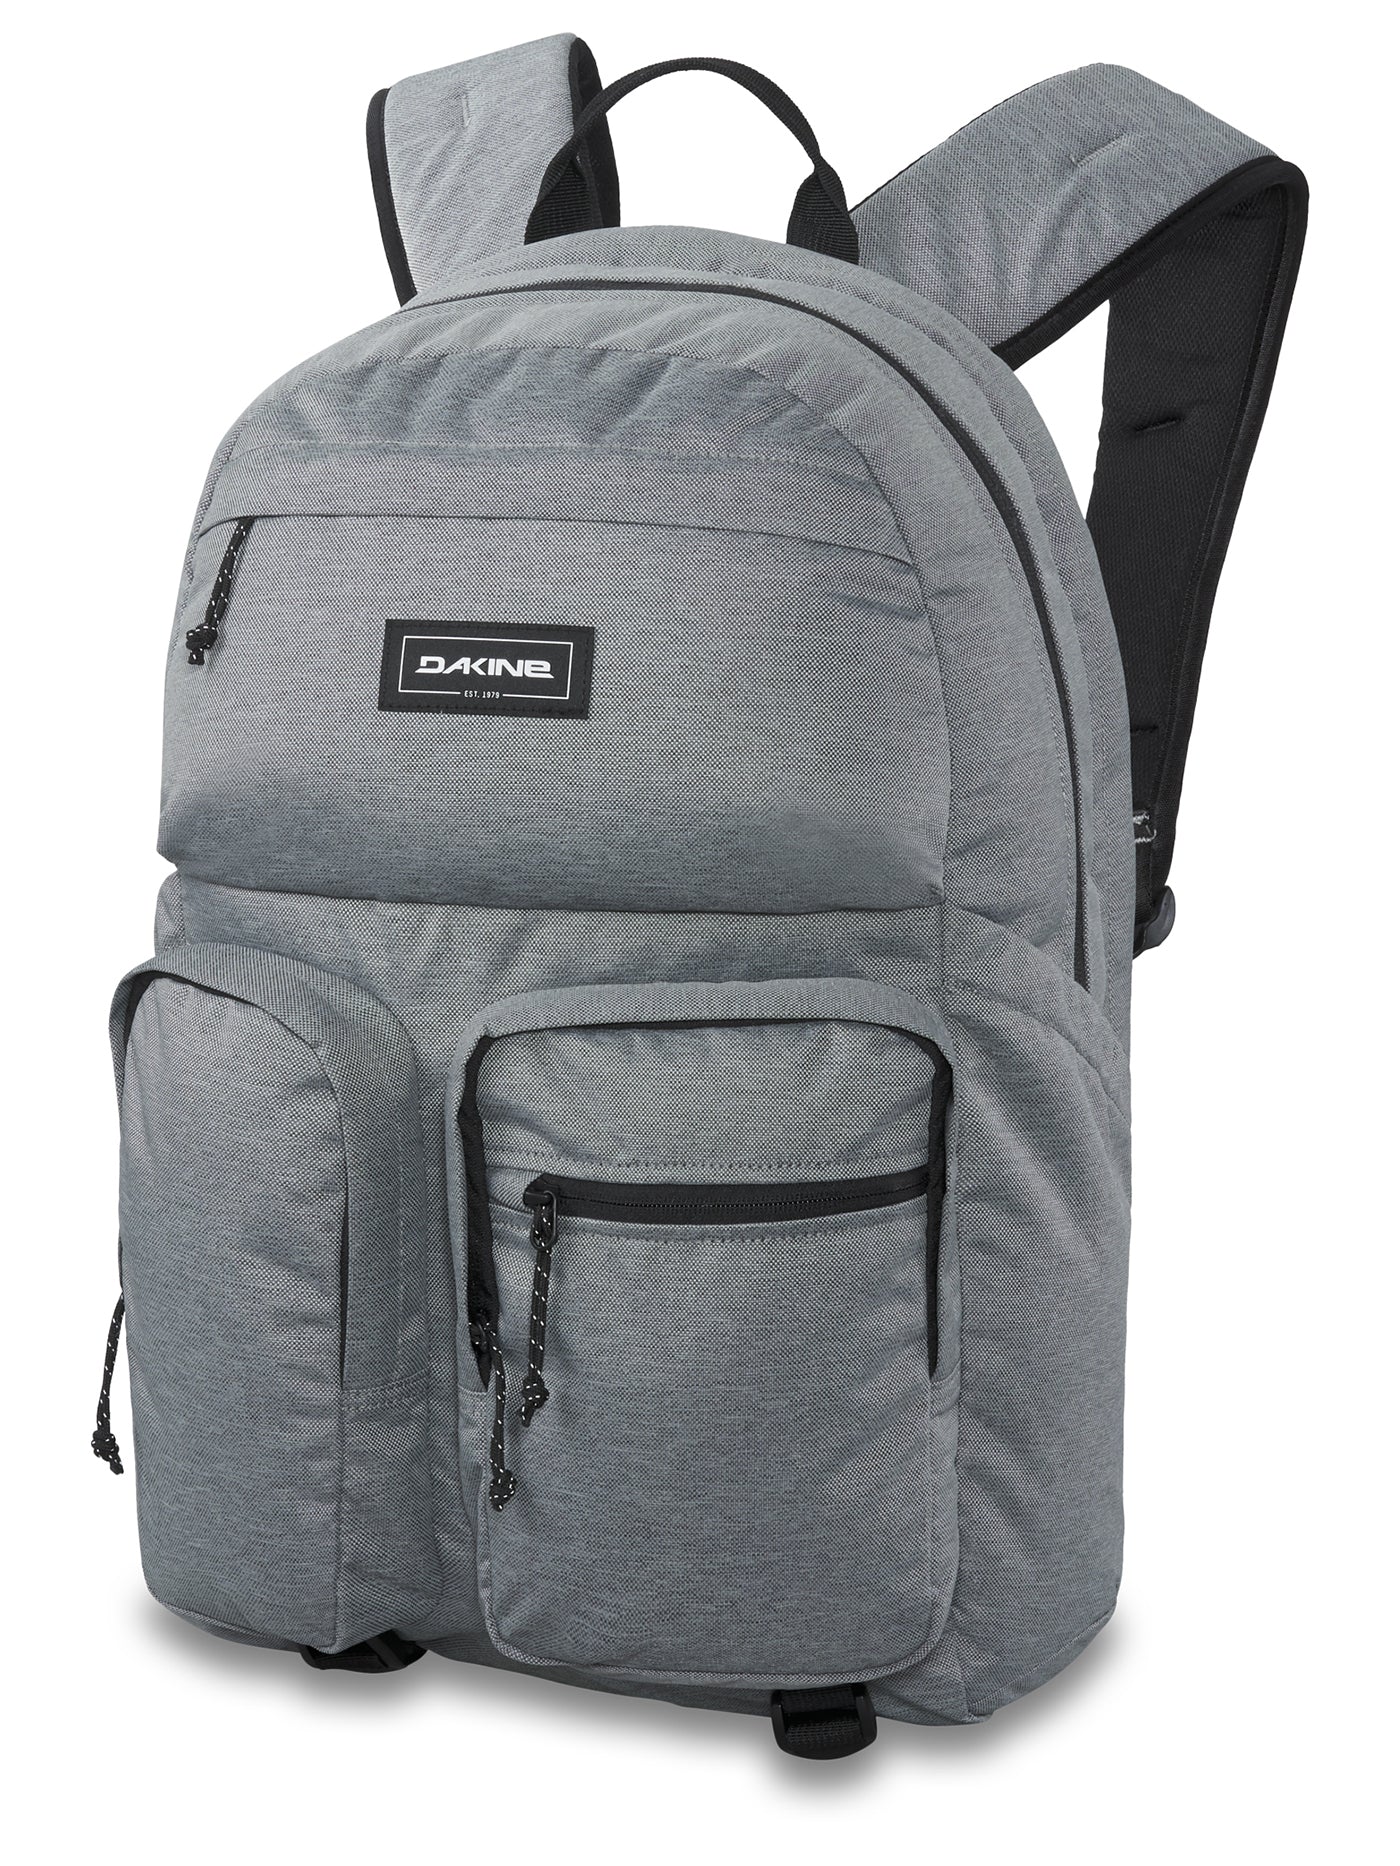 Dakine Method DLX 28L Backpack